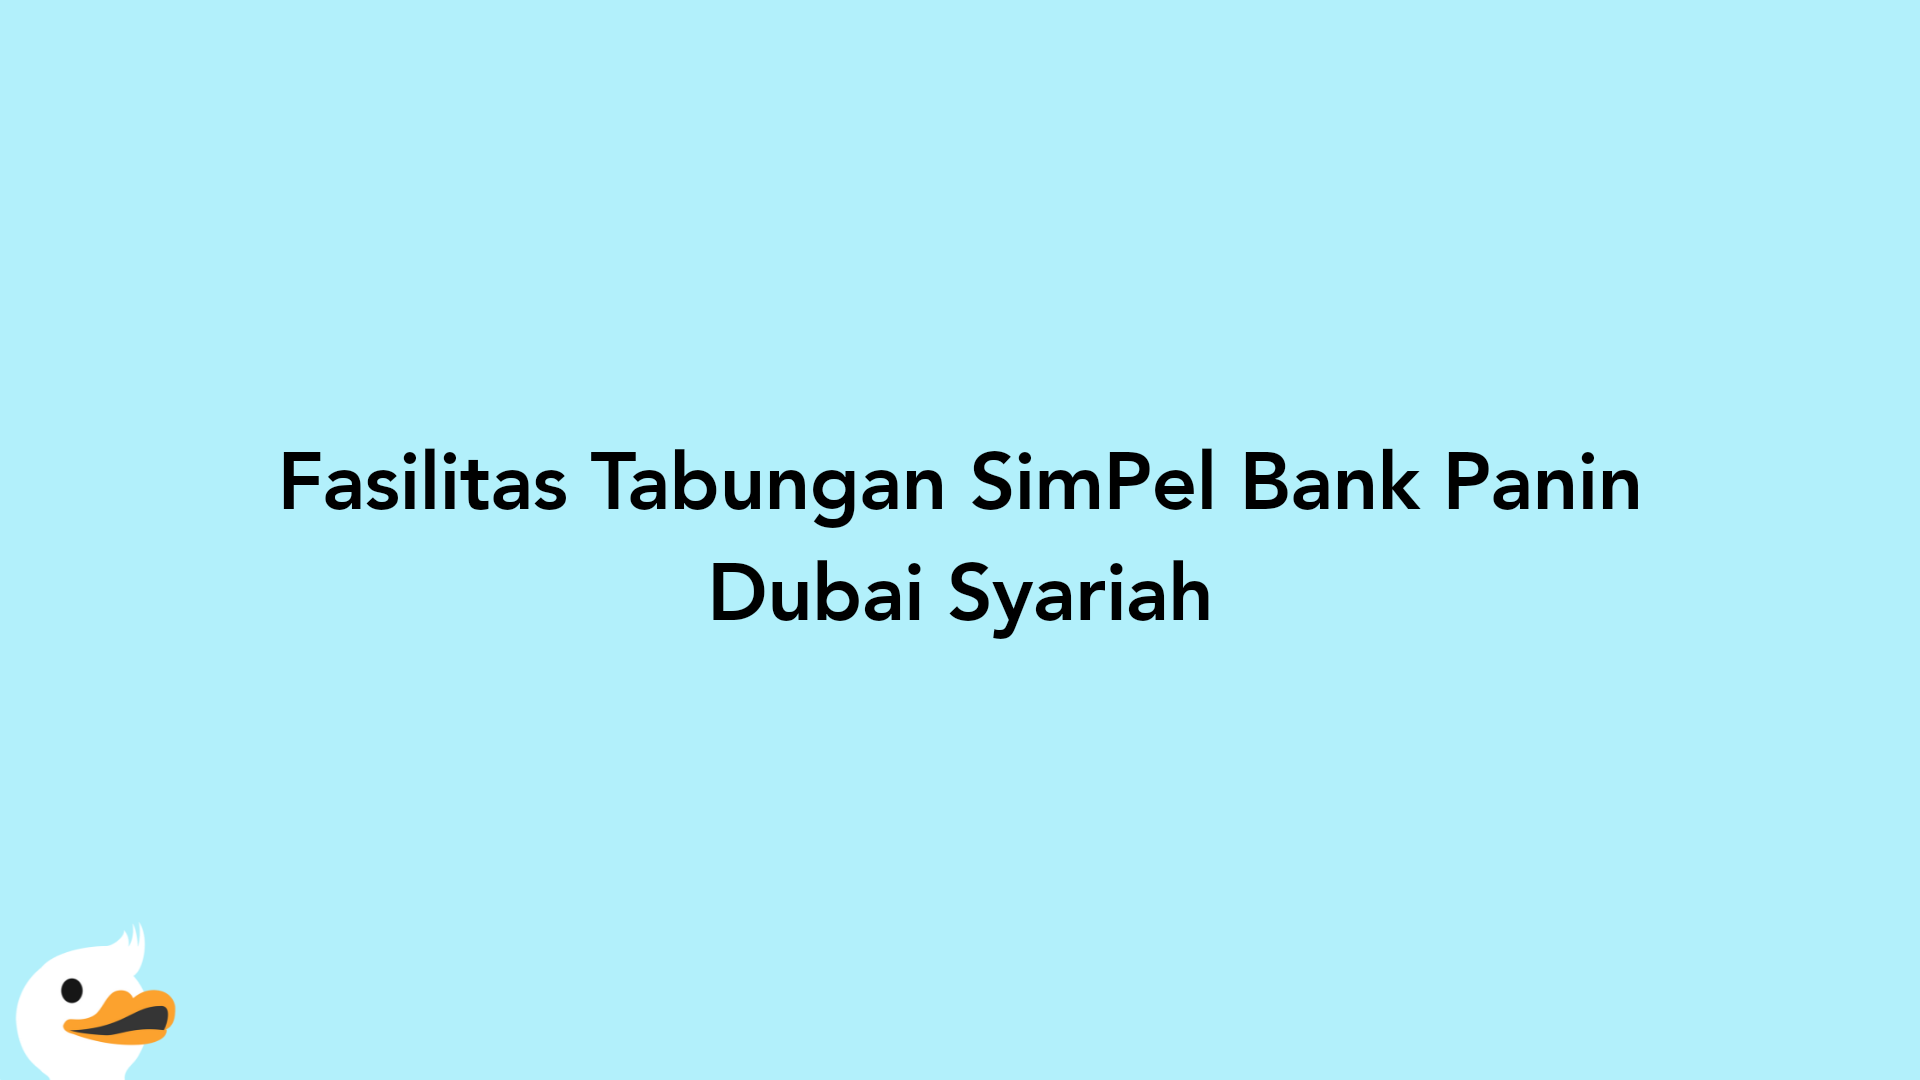 Fasilitas Tabungan SimPel Bank Panin Dubai Syariah